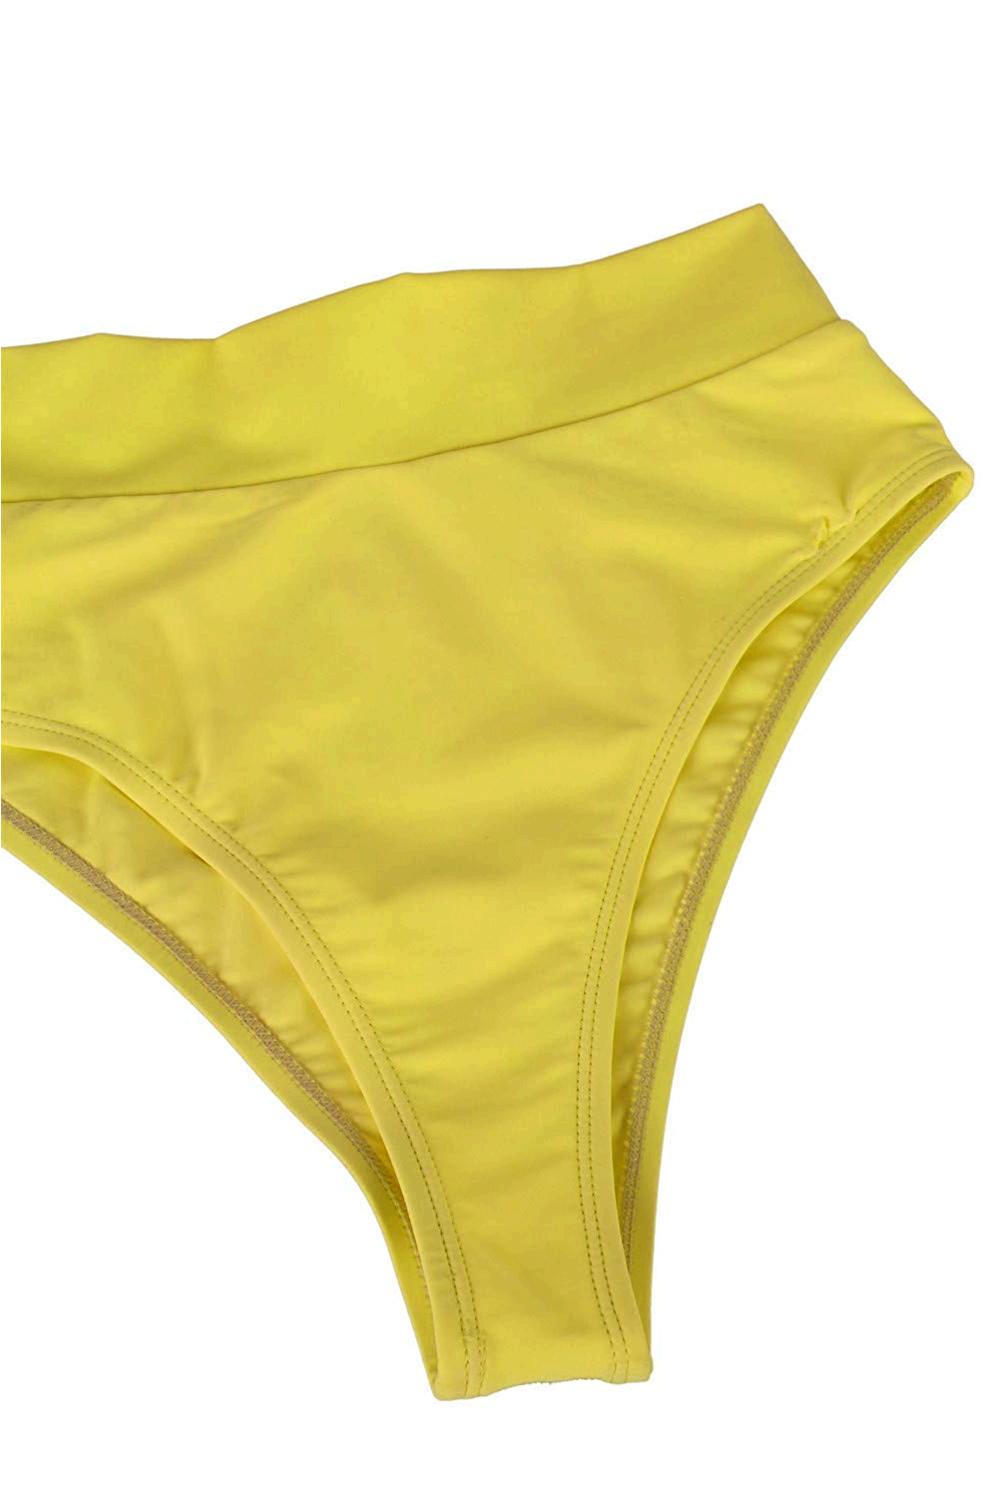 Viottiset Women's Bazilian Thong High Waist Bathing Suit, Yellow, Size ...